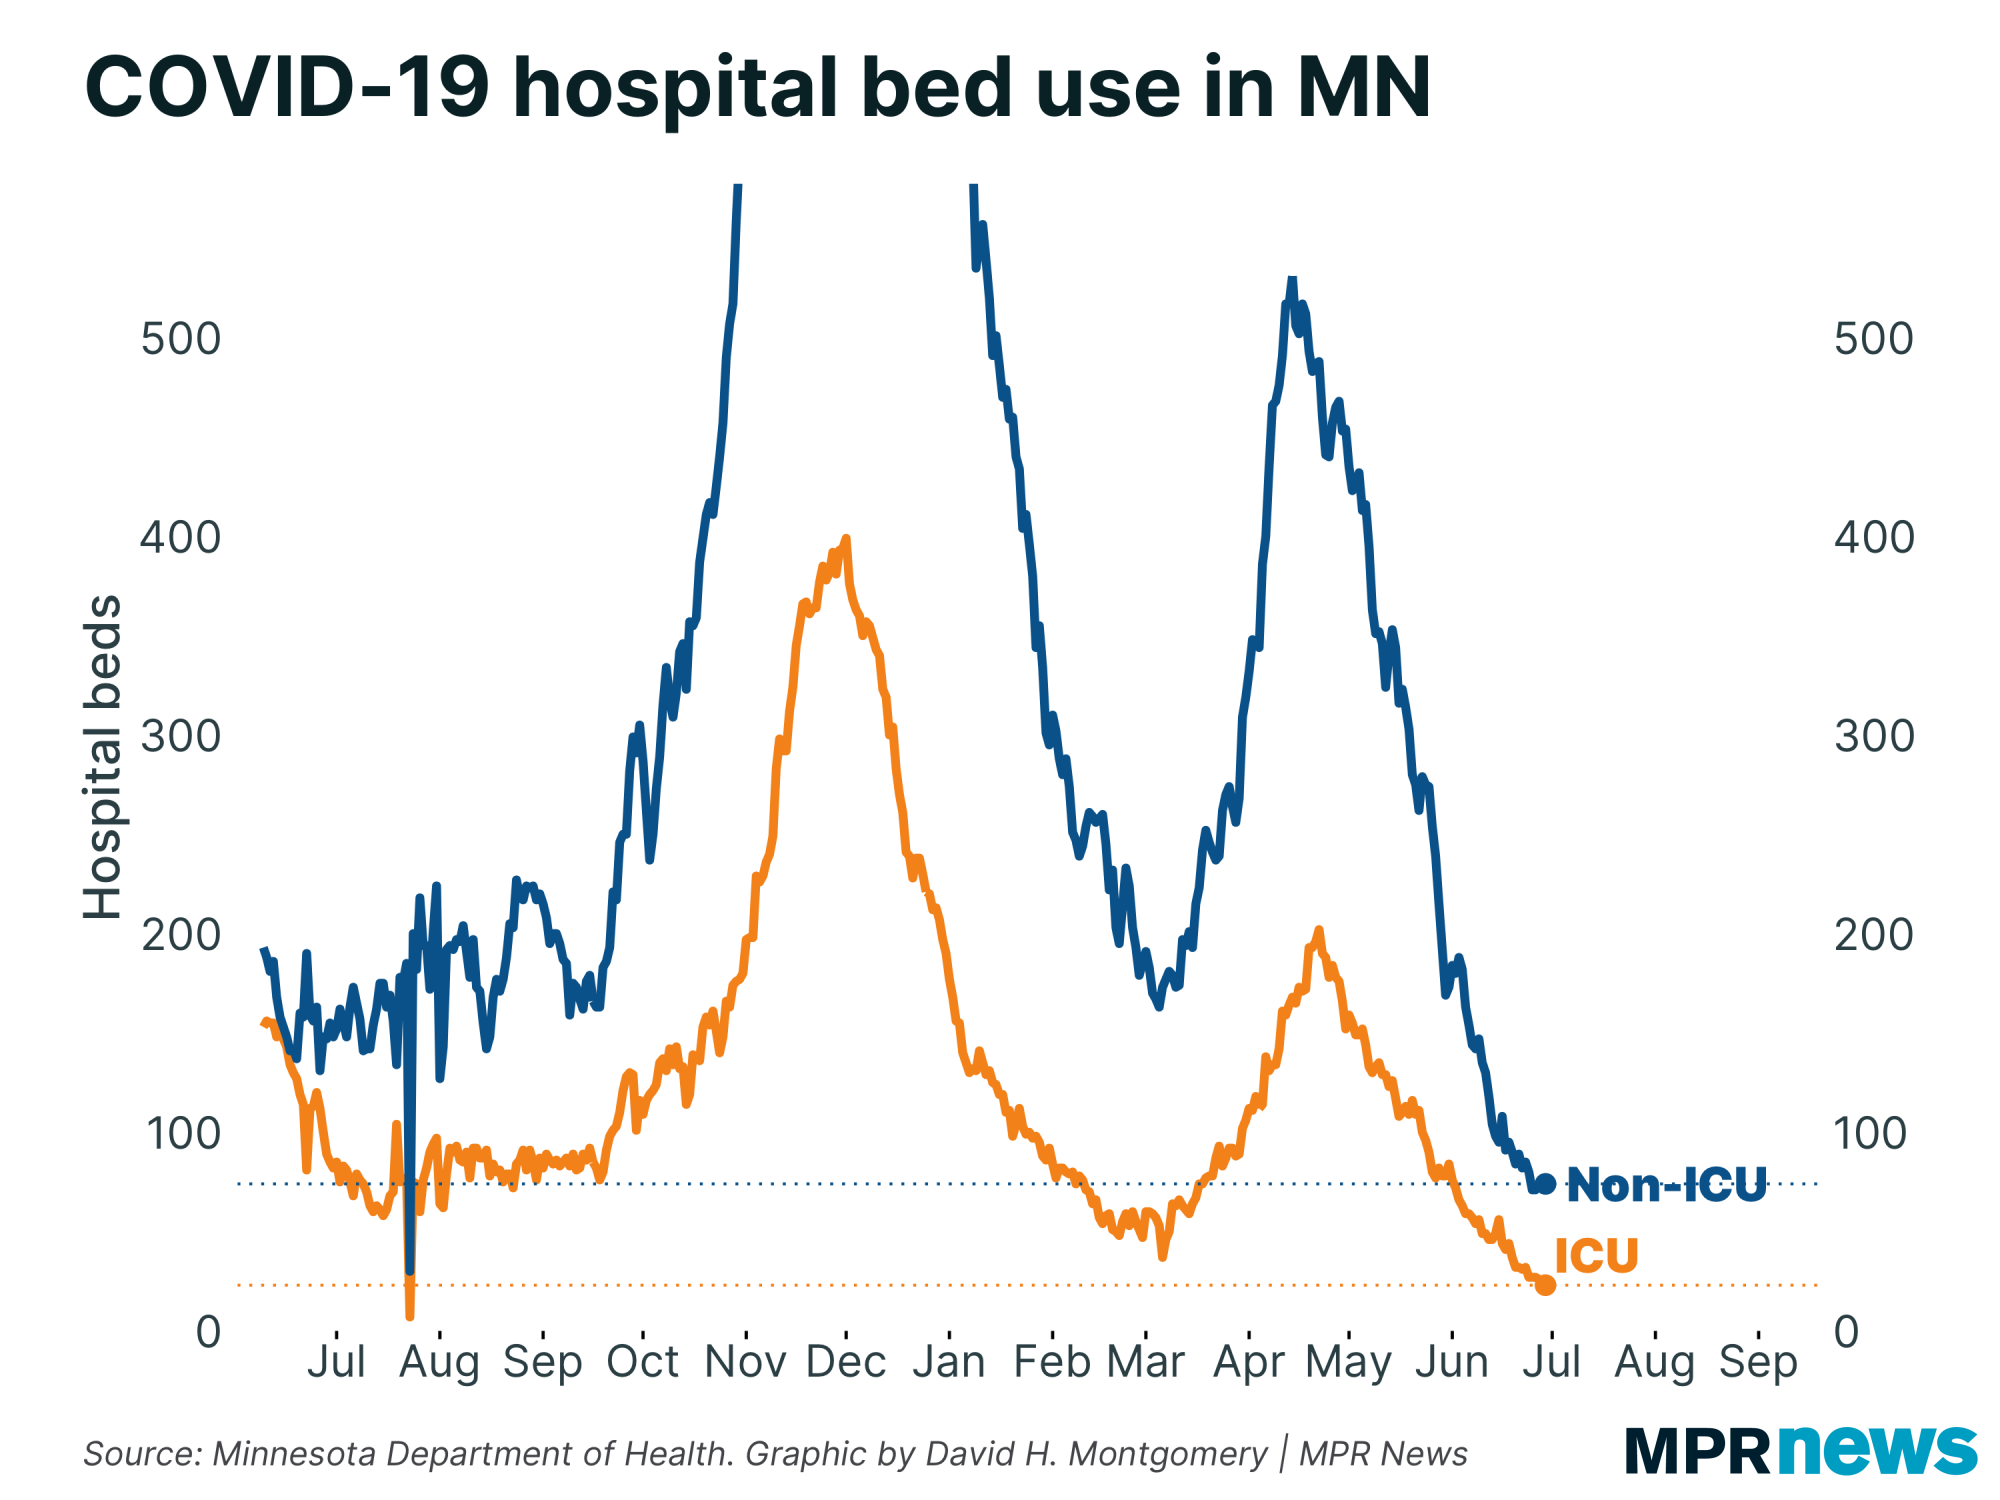 Graph of Minnesota COVID-19 hospital bed use